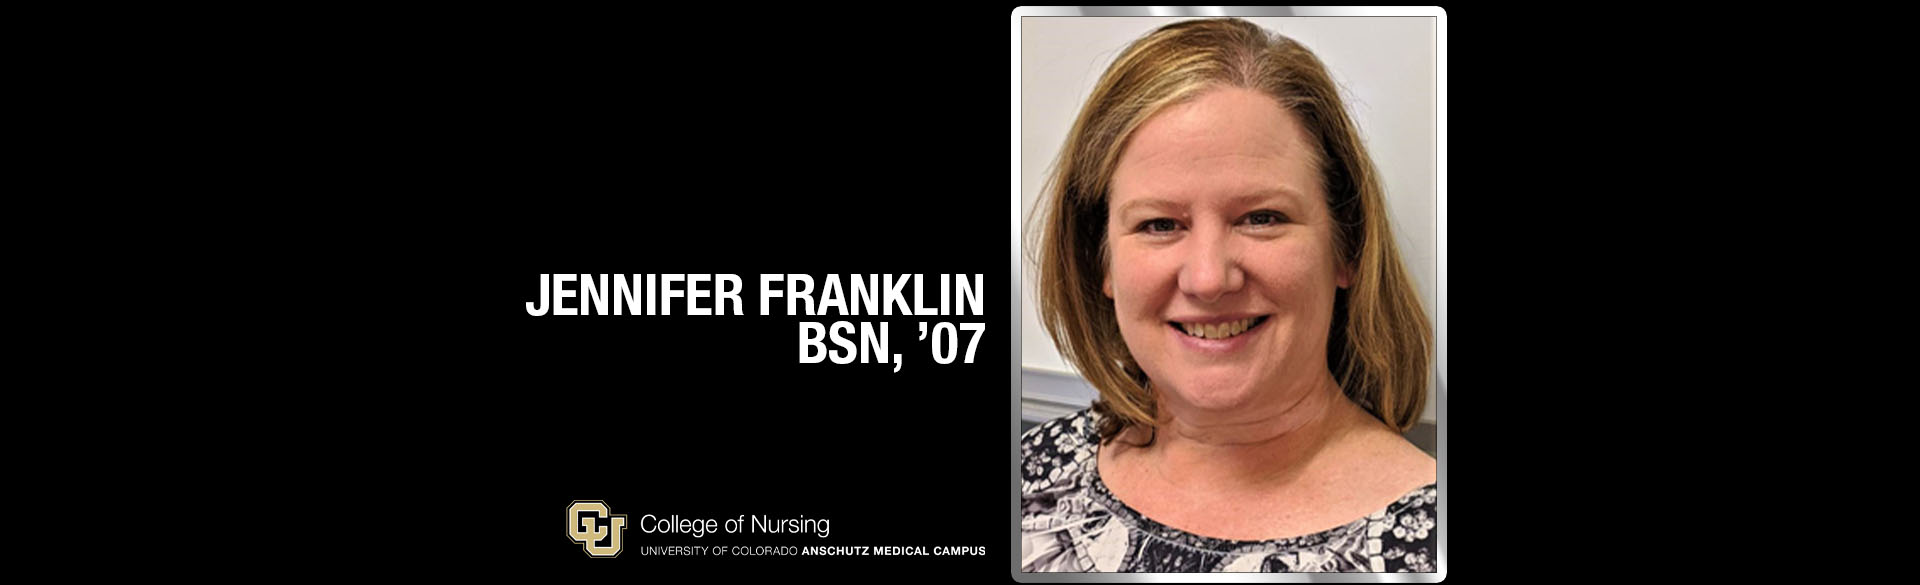 Jennifer Franklin, BSN, '07 testimonal